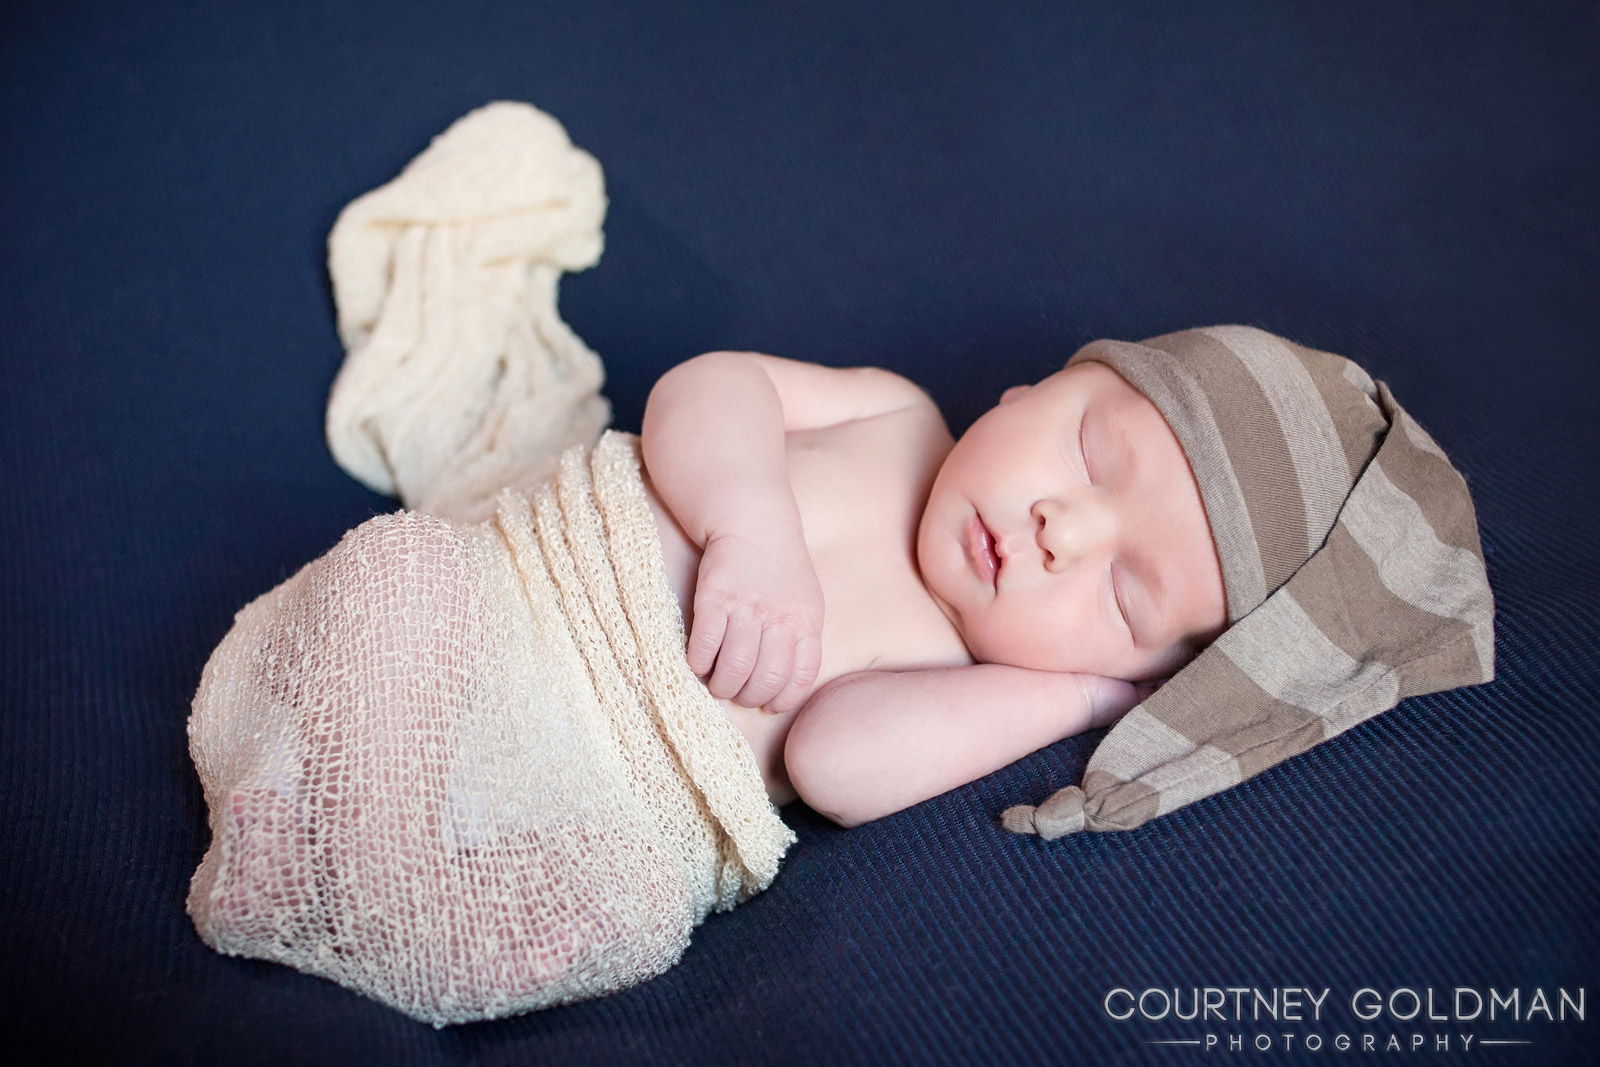 Atlanta Maternity and Newborn Photography by Courtney Goldman 41.jpg